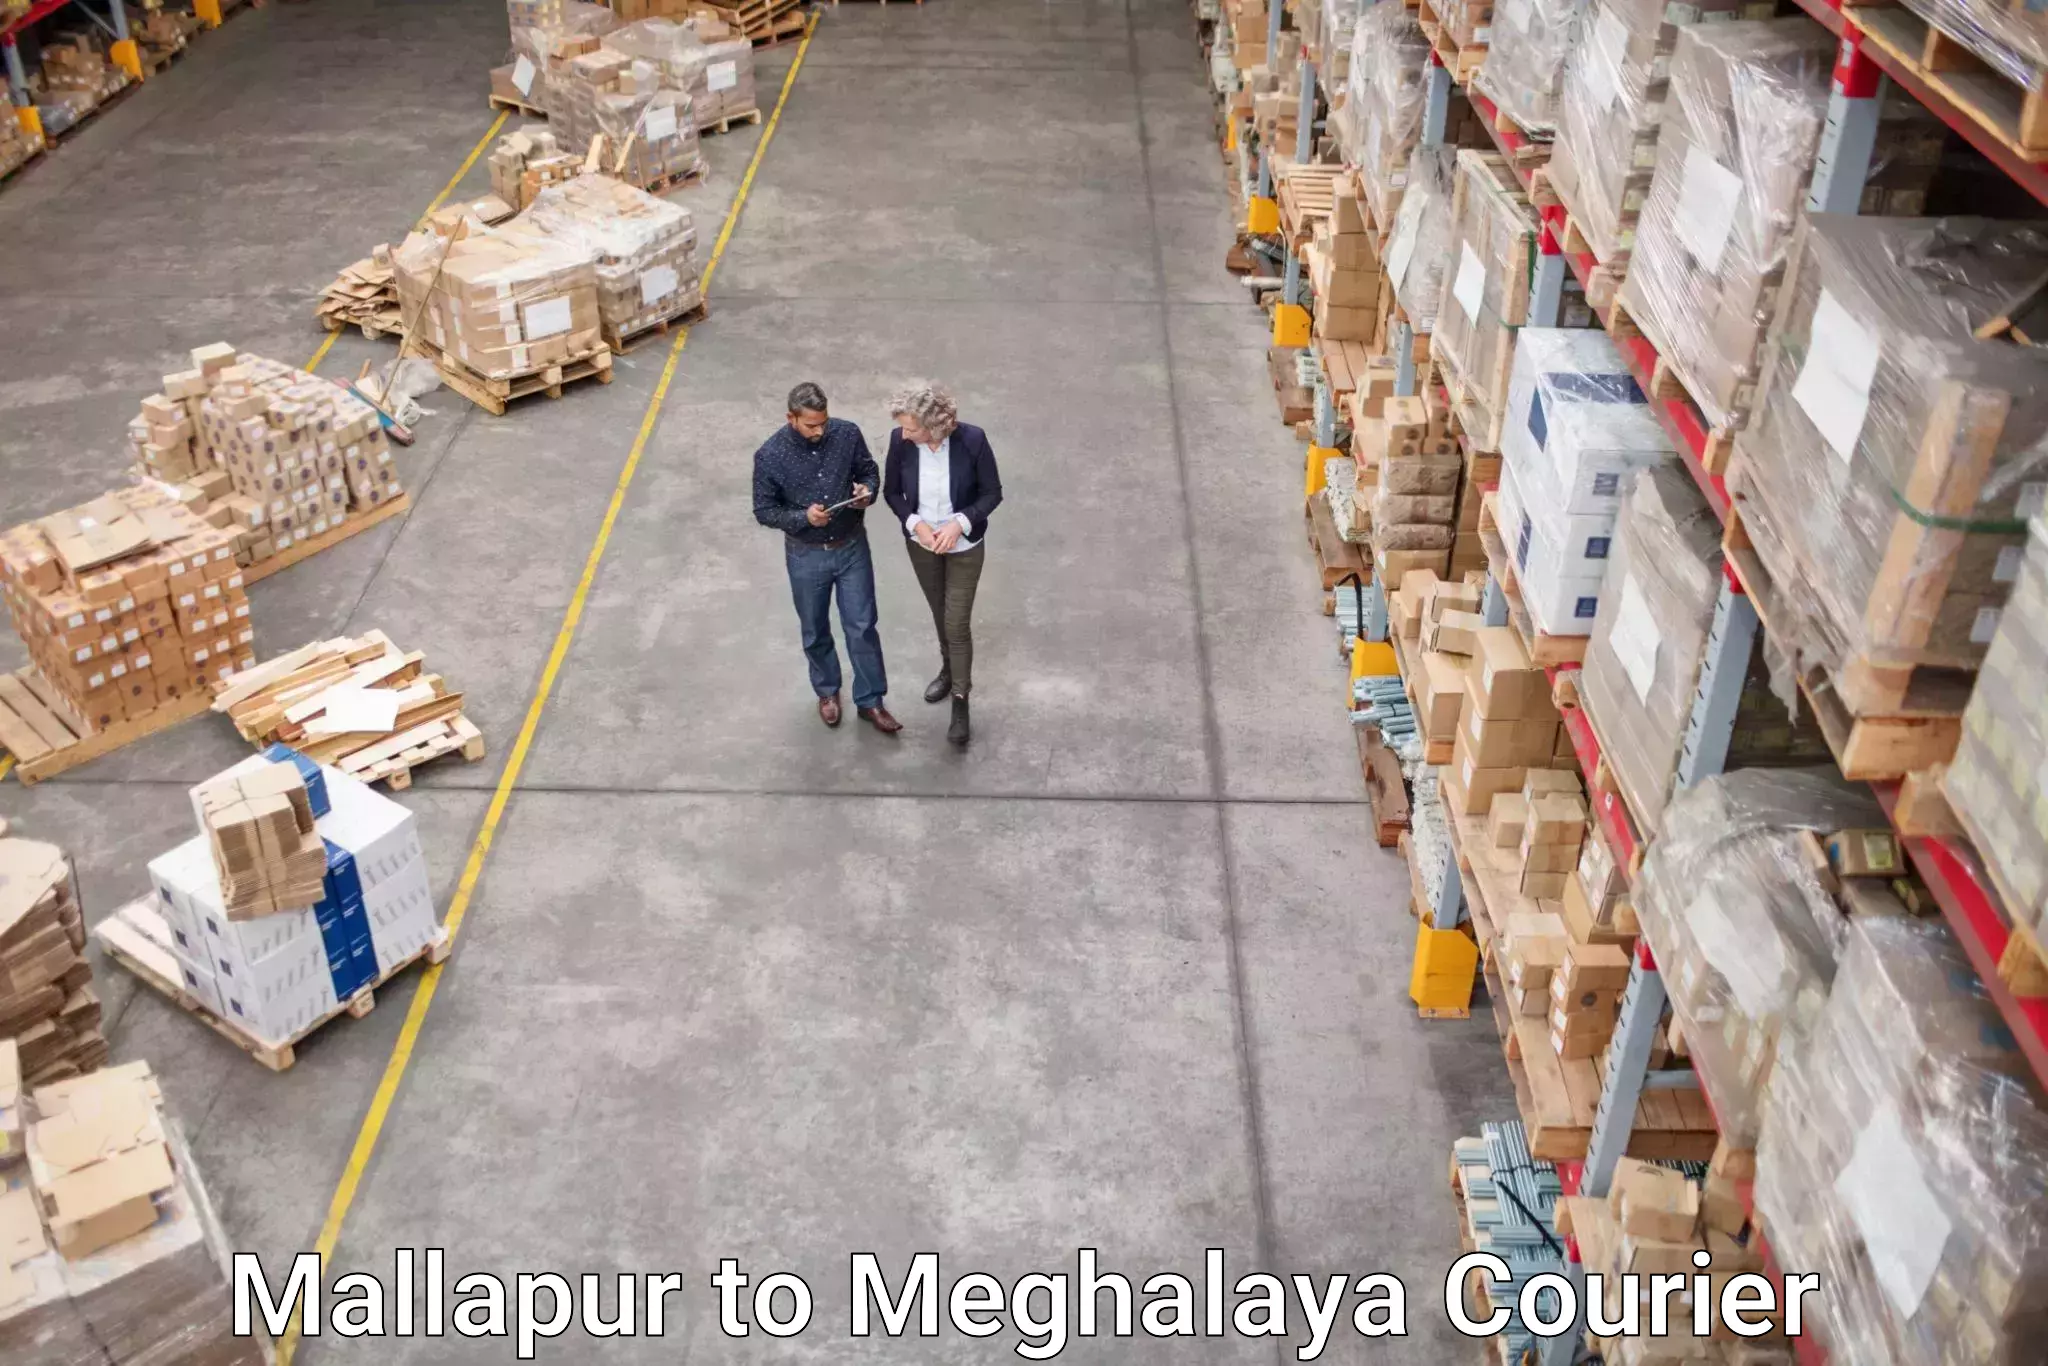 Multi-service courier options Mallapur to Shillong